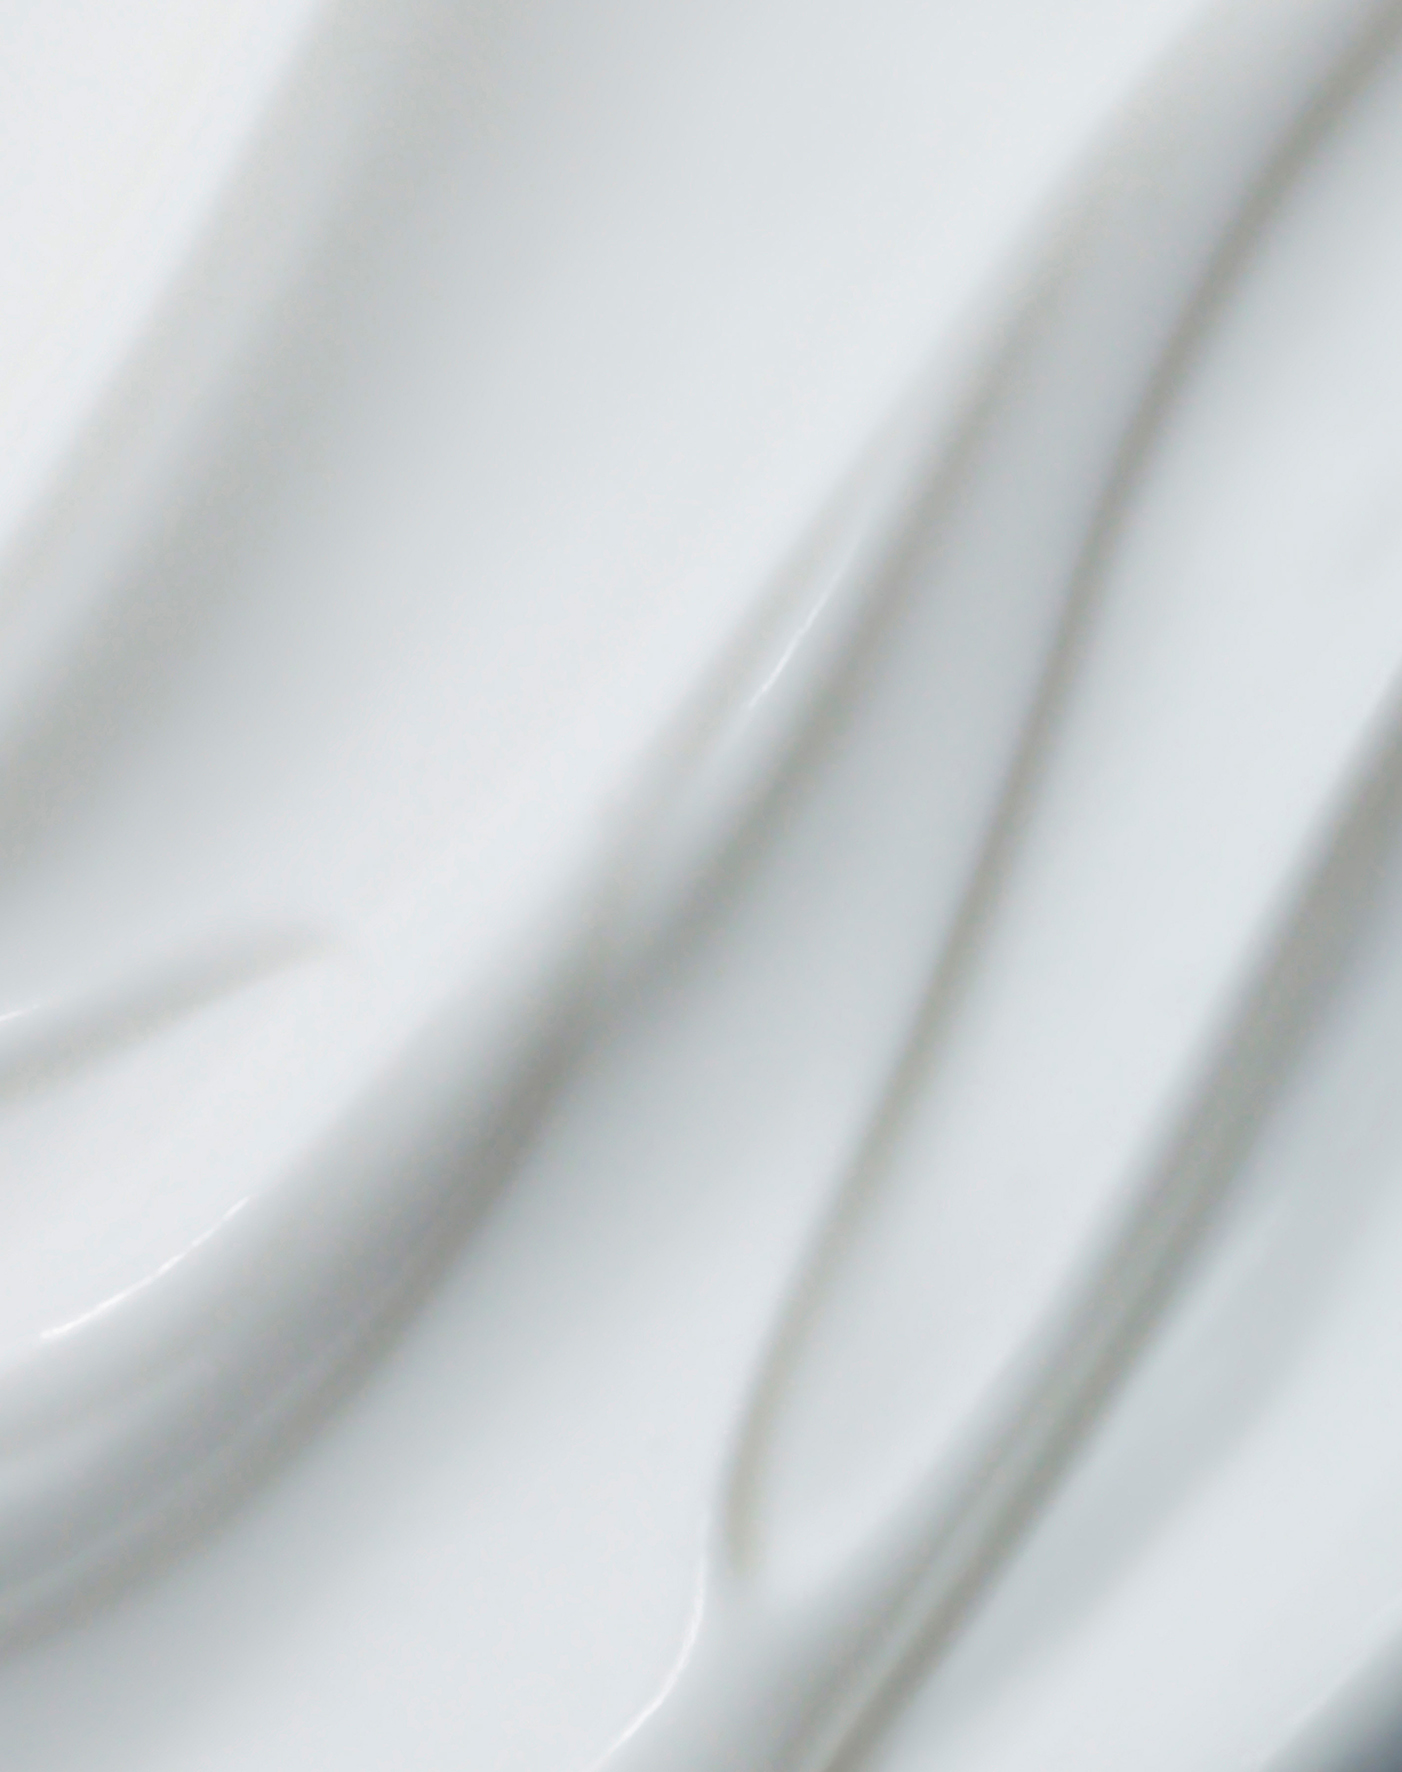 1c--PSD-Yogurt-textura-completo